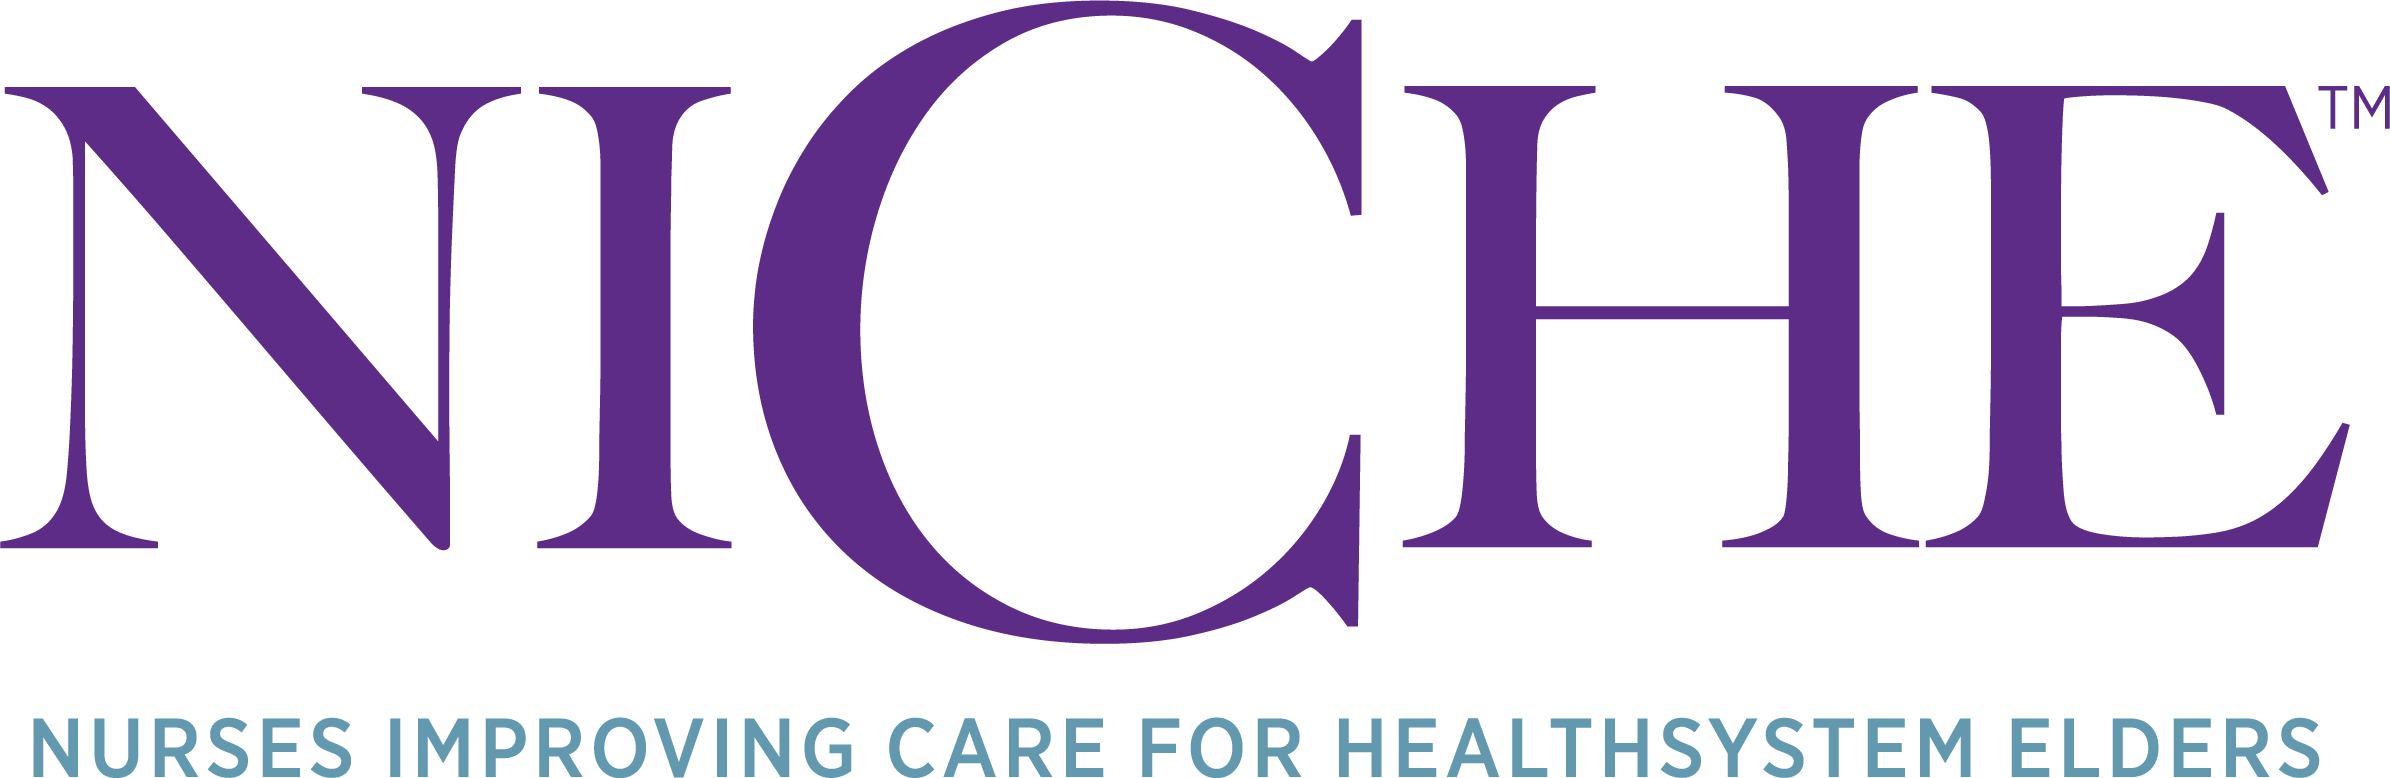 Nurses improving care for healthsystem elders logo